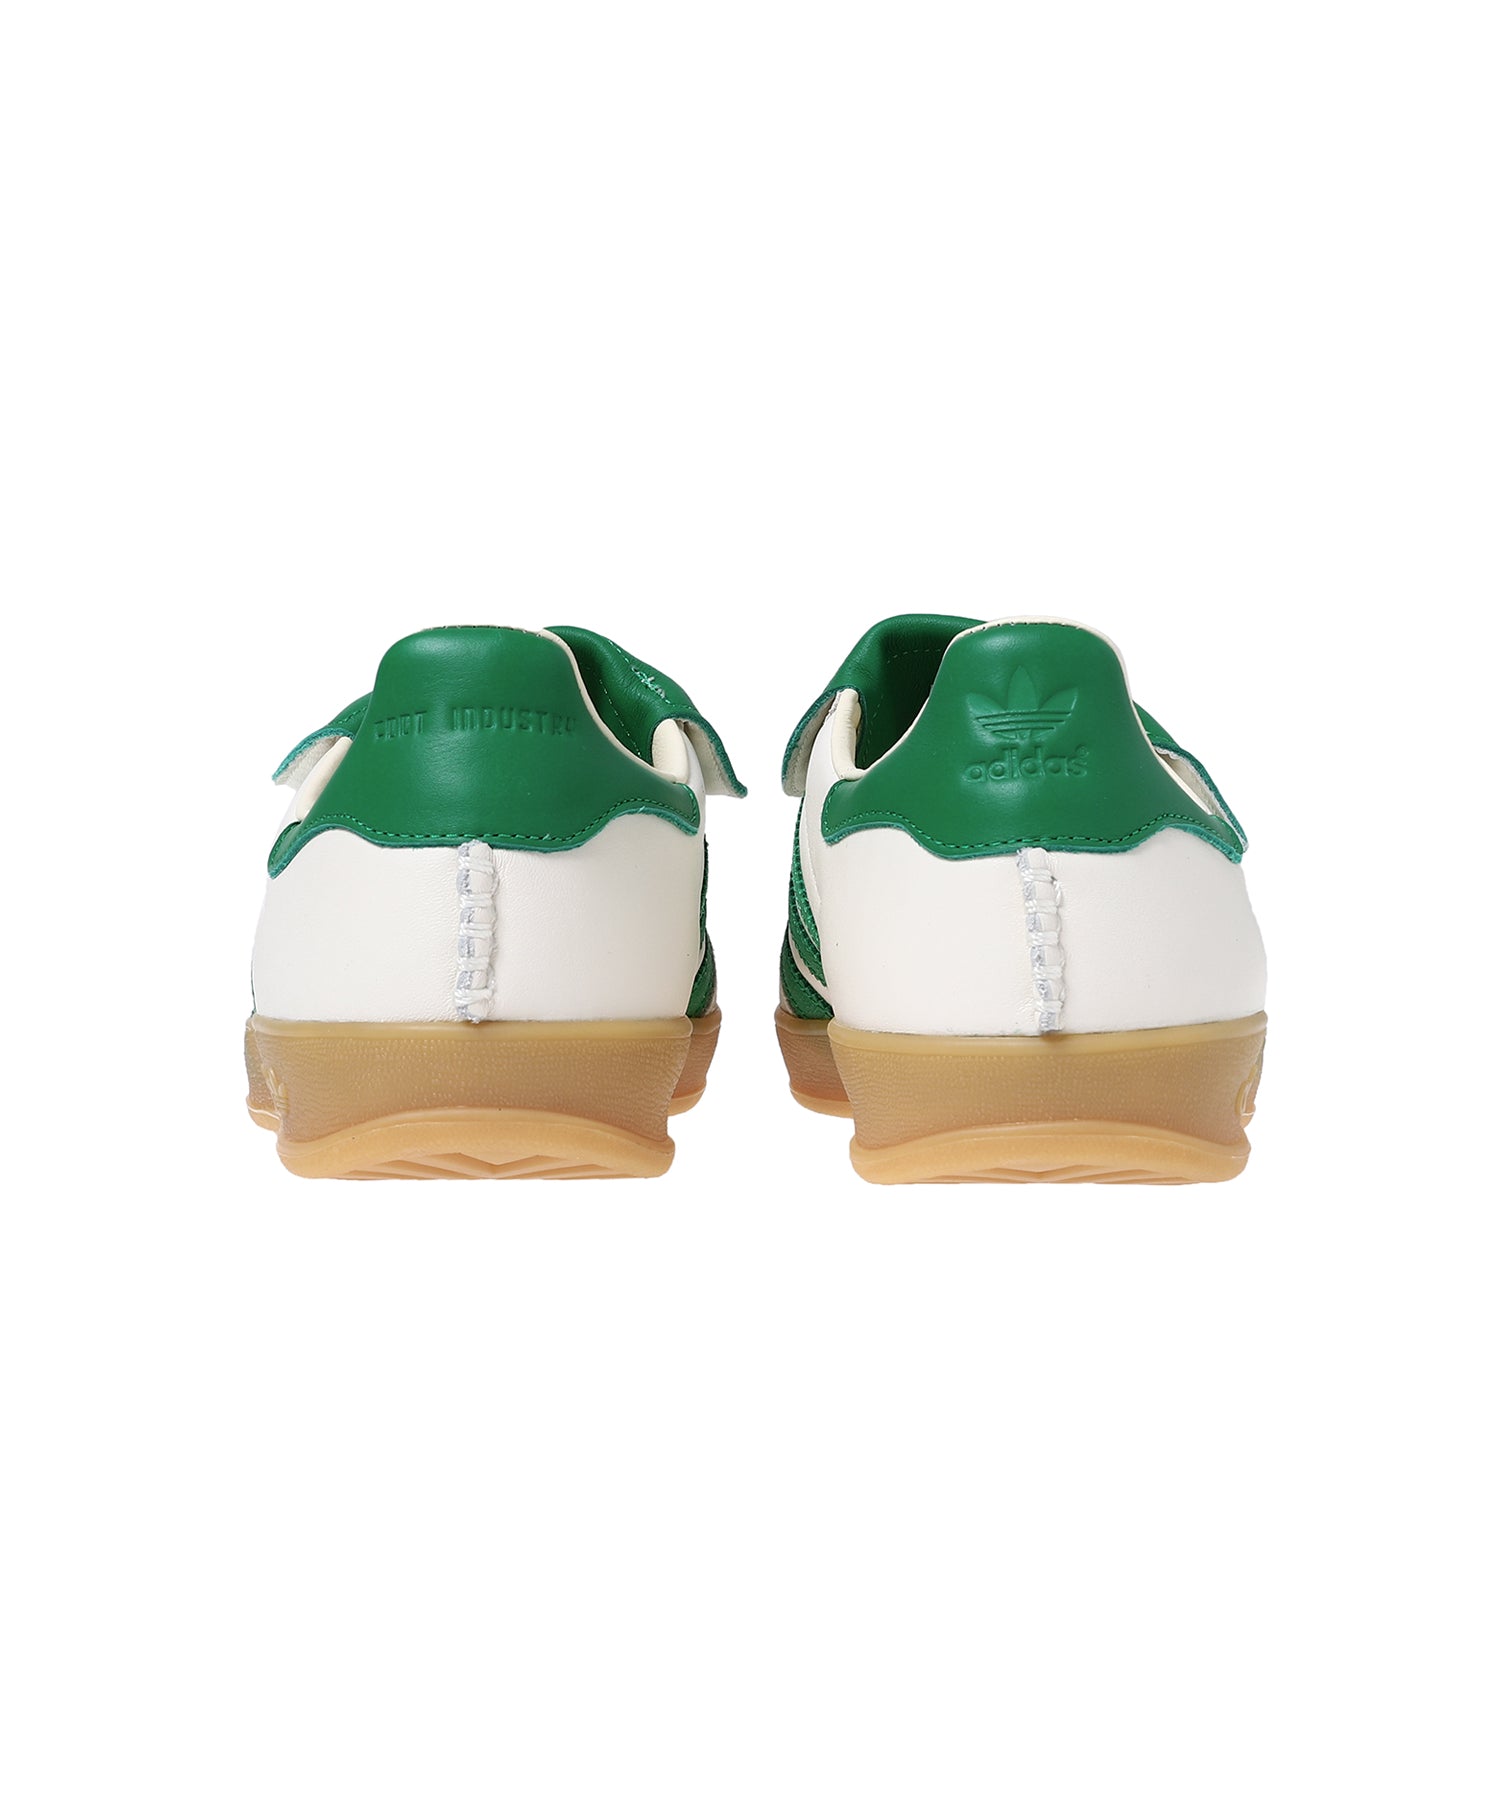 GAZELLE INDOOR FOOT INDUSTRY - adidas (アディダス) - shoes